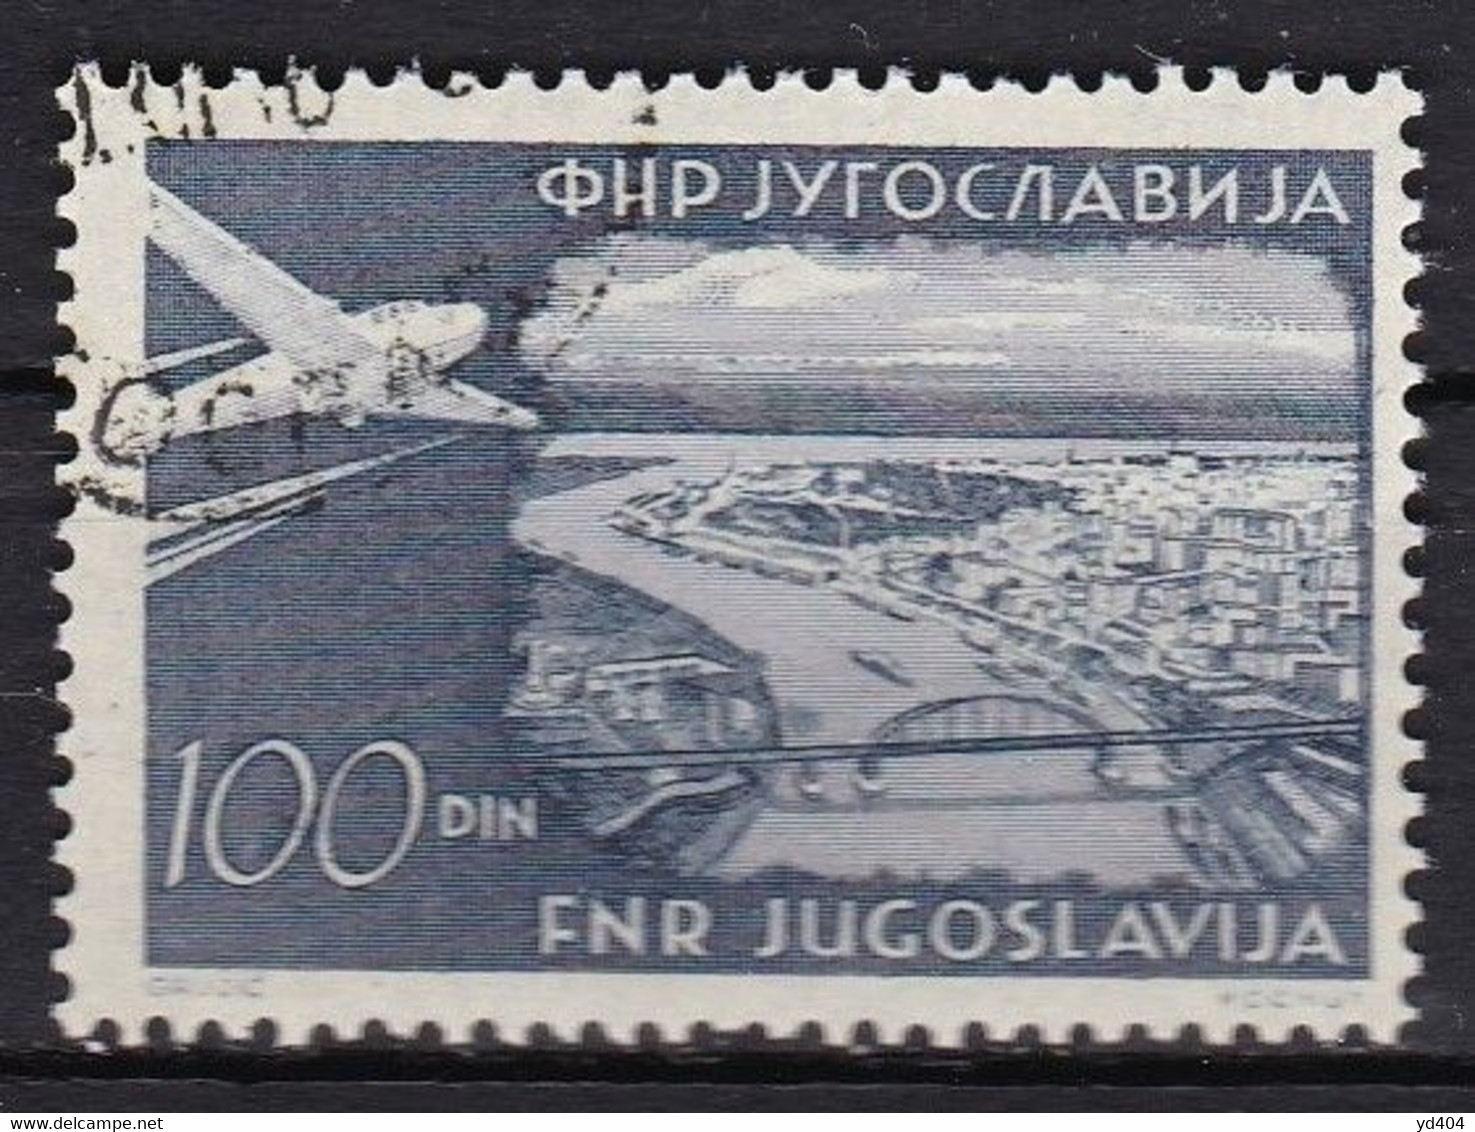 YU409 – YOUGOSLAVIA – AIRMAIL – 1951 – PLANE OVER BELGRADE – Y&T # 40 USED 22 € - Poste Aérienne